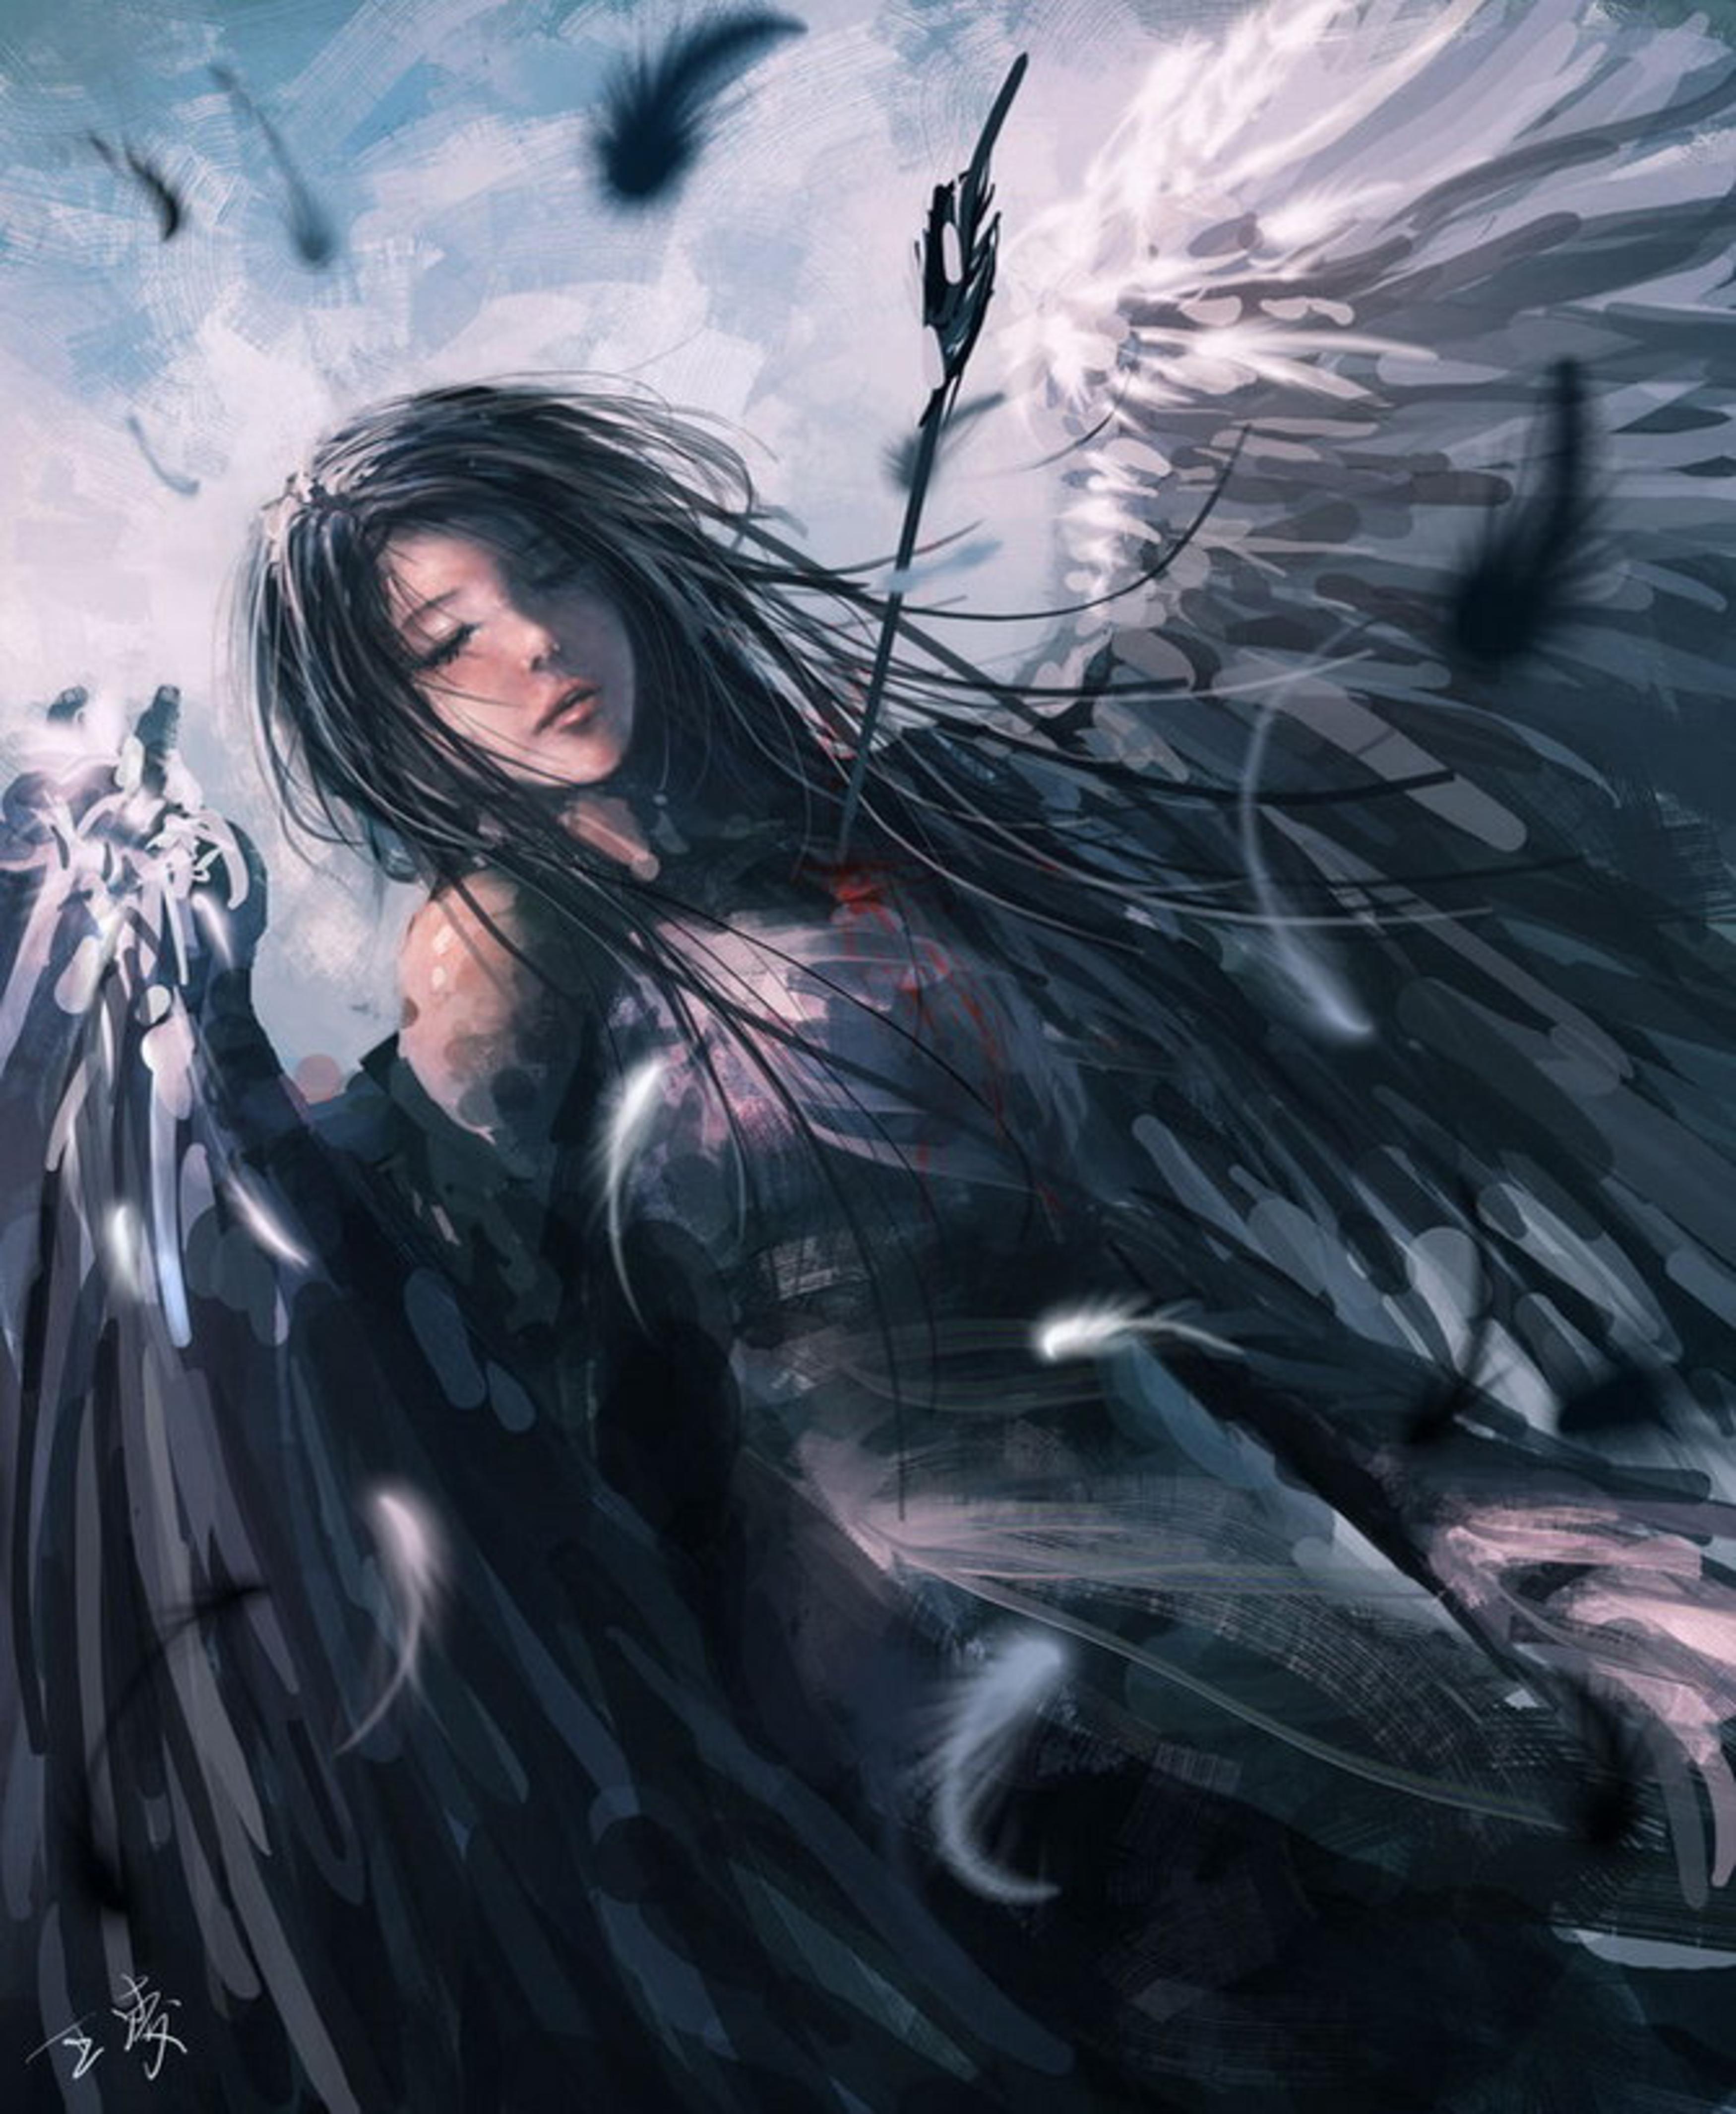 Fallen angel s. Wlop Art ангел. By wlop ангел. Wlop (Wang Ling) ведьма.